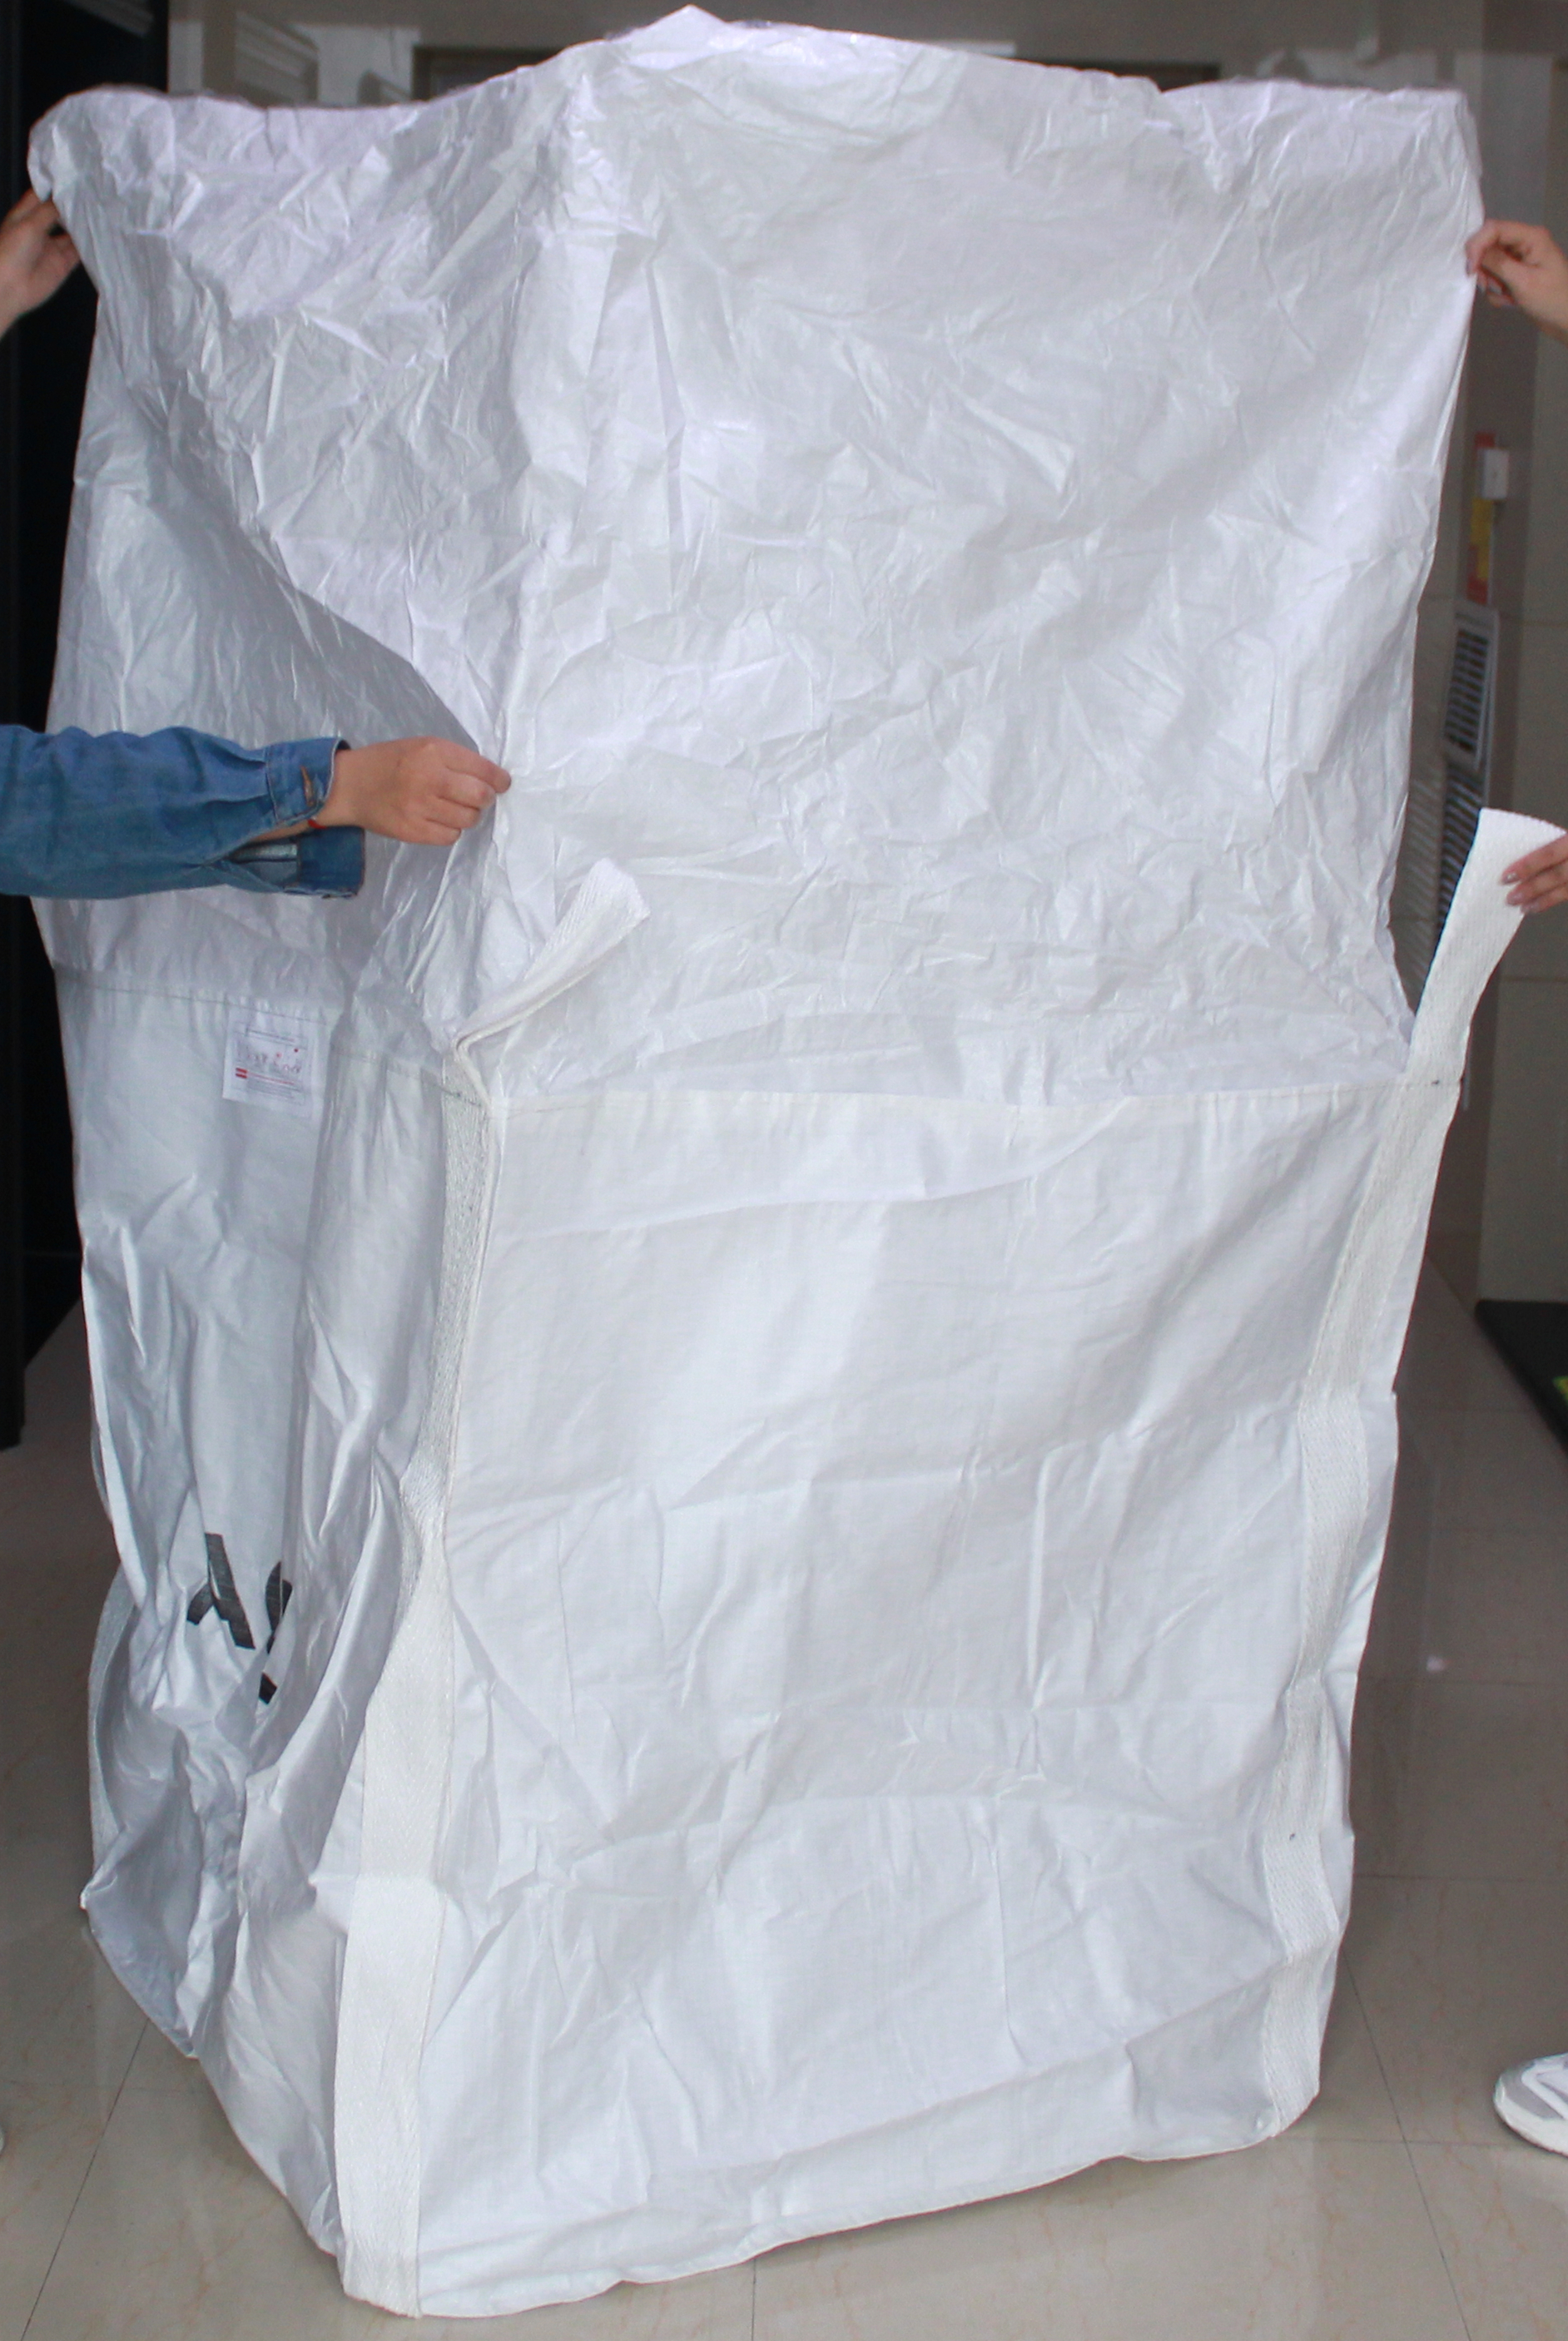 FIBC bag Jumbo Big Bags PP 1000kgs 1500kg White Skirt Top bulk bag